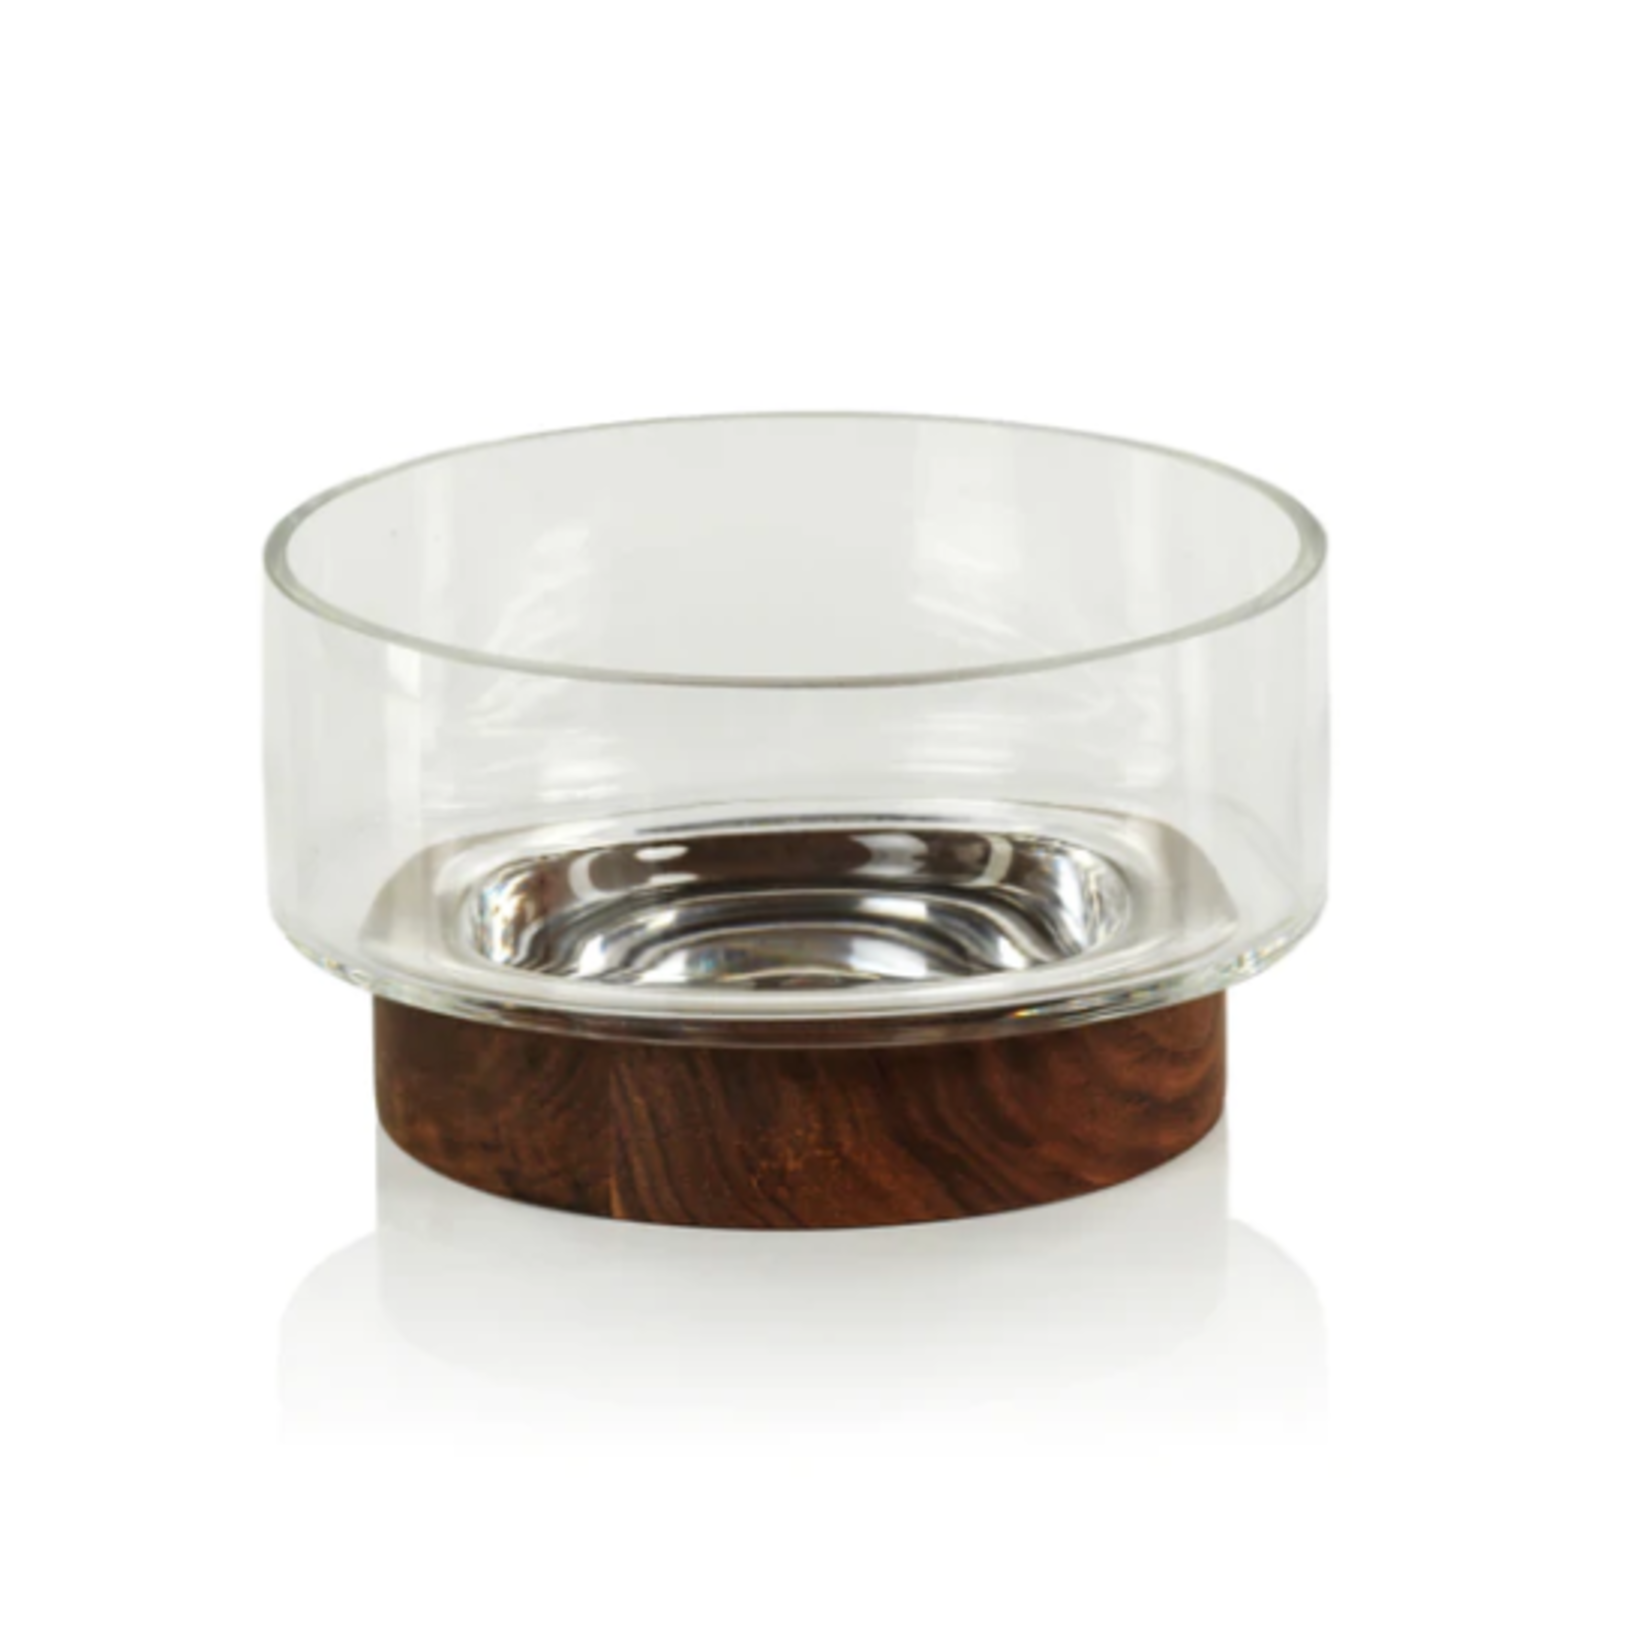 Zodax Glass Bowl on Walnut Wood Base Small